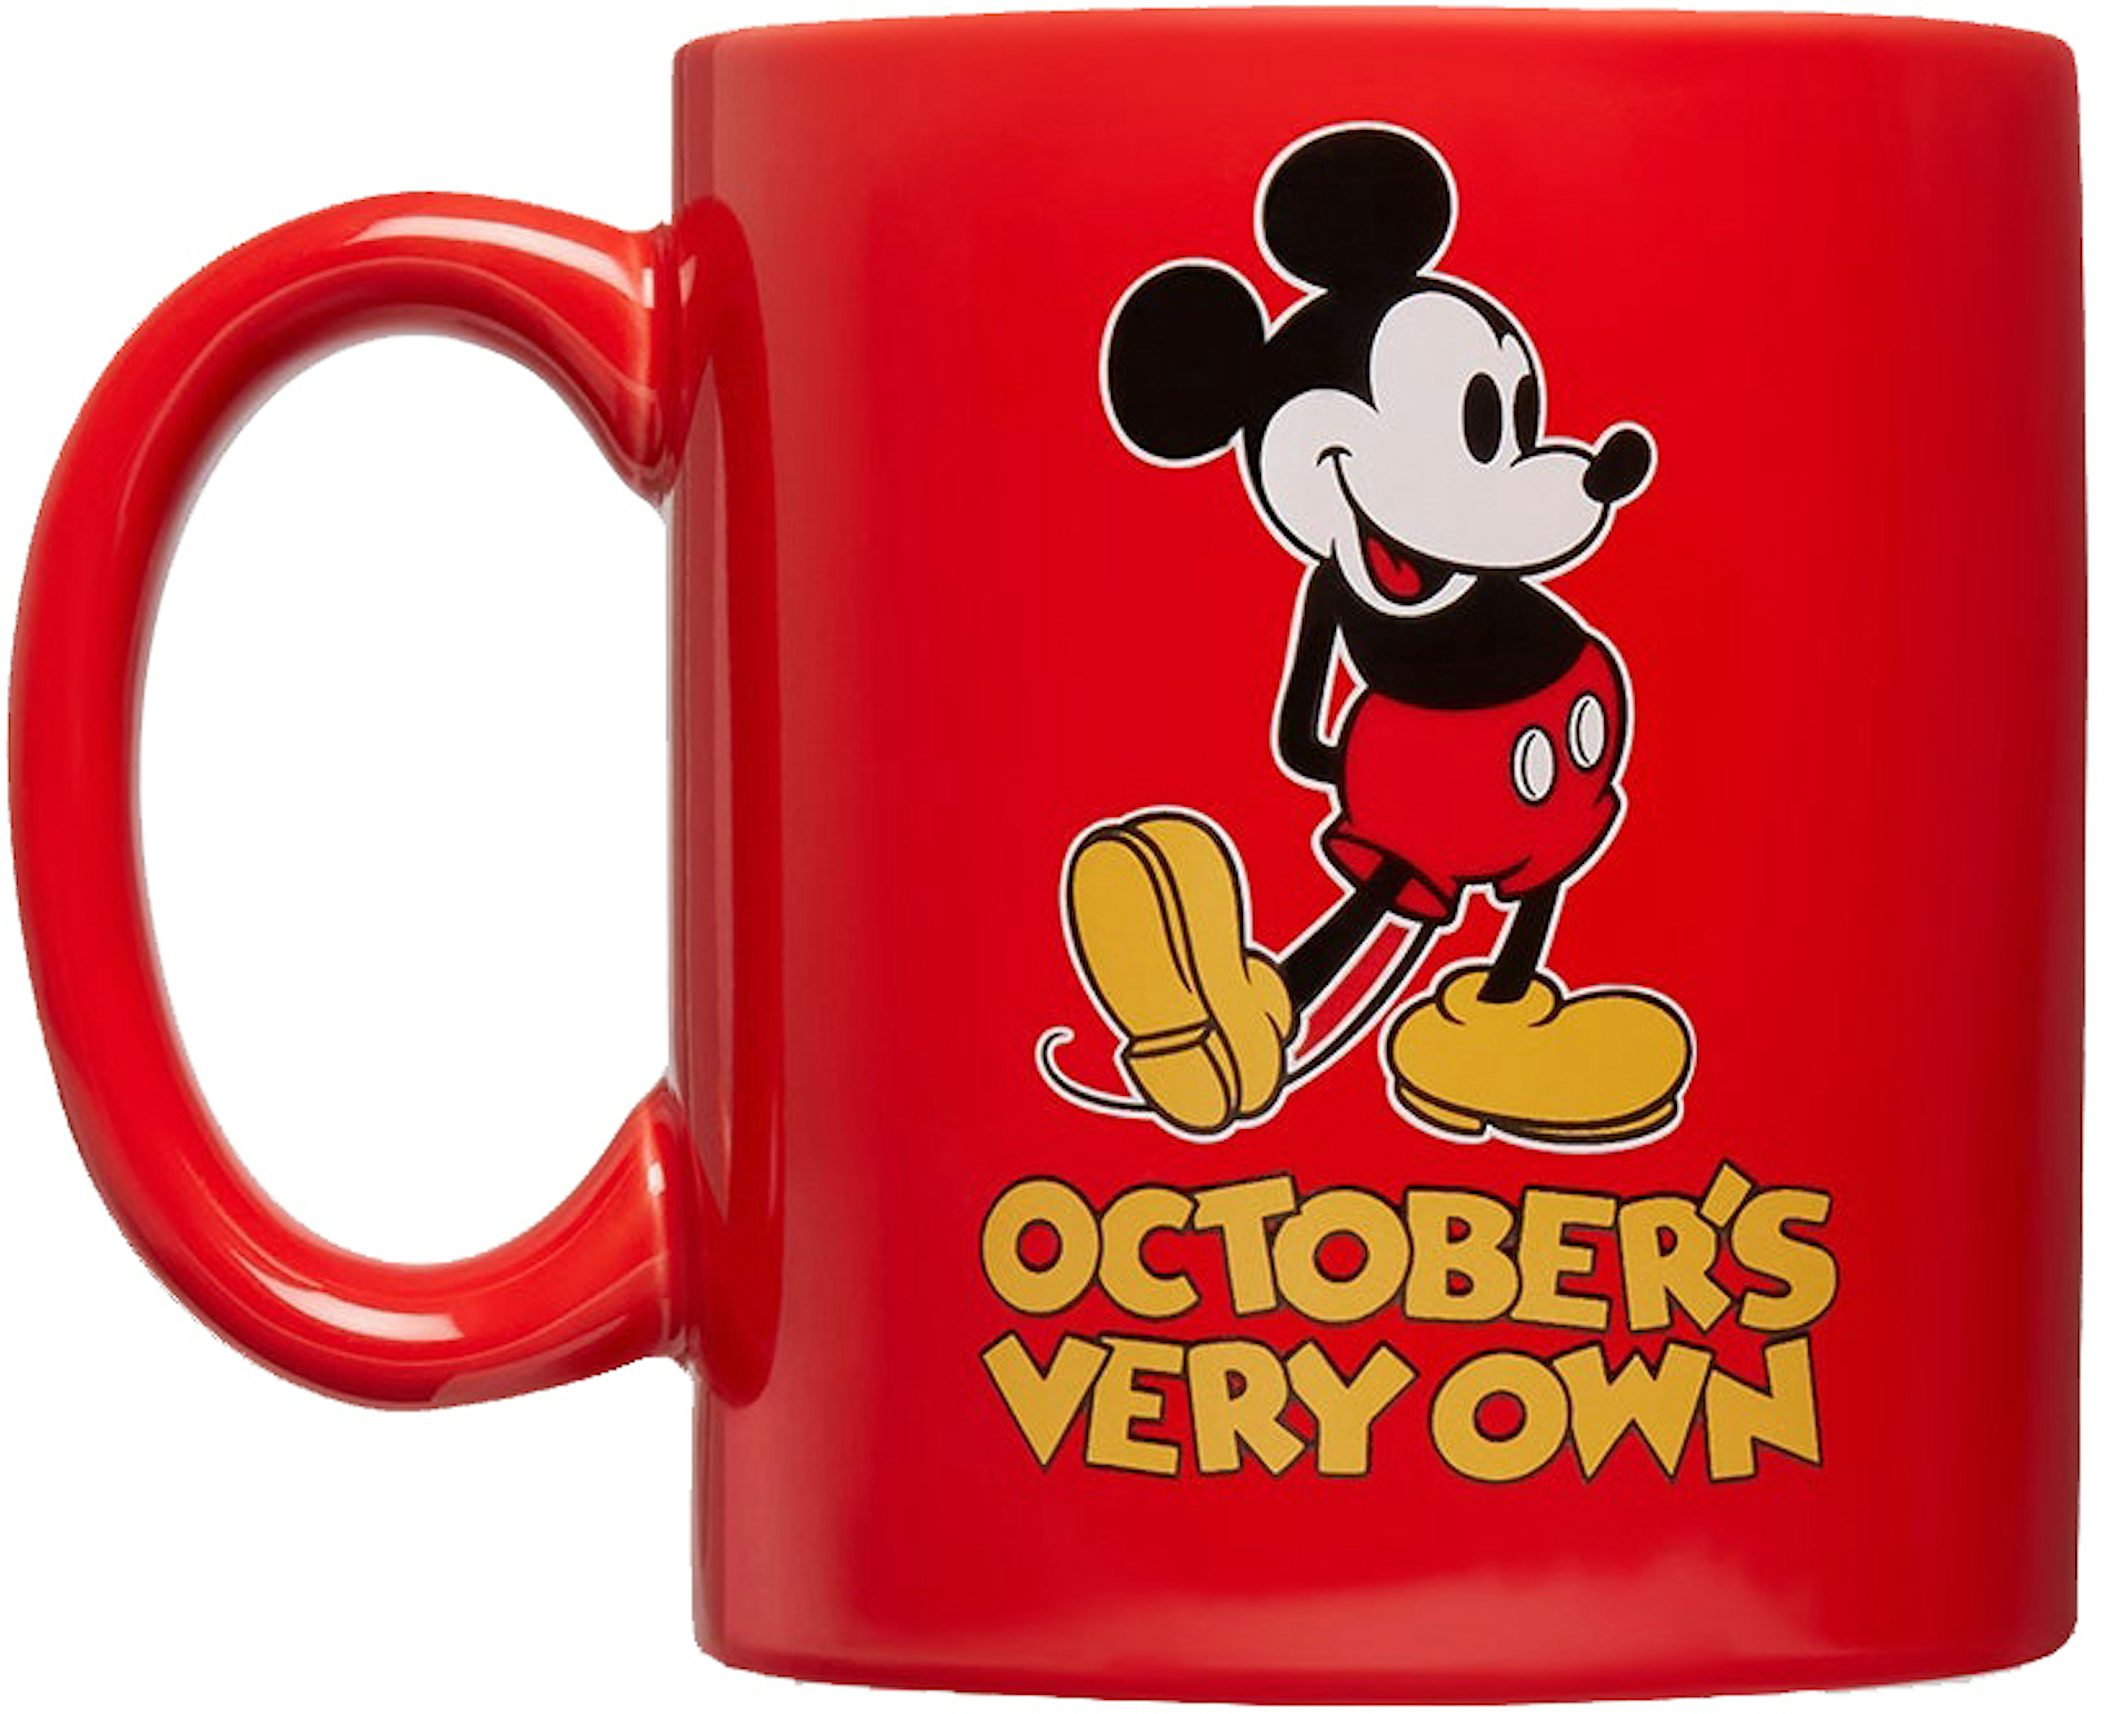 https://images.stockx.com/images/OVO-x-Disney-Classic-Mickey-Mug-Red.jpg?fit=fill&bg=FFFFFF&w=1200&h=857&fm=jpg&auto=compress&dpr=2&trim=color&updated_at=1646087658&q=60